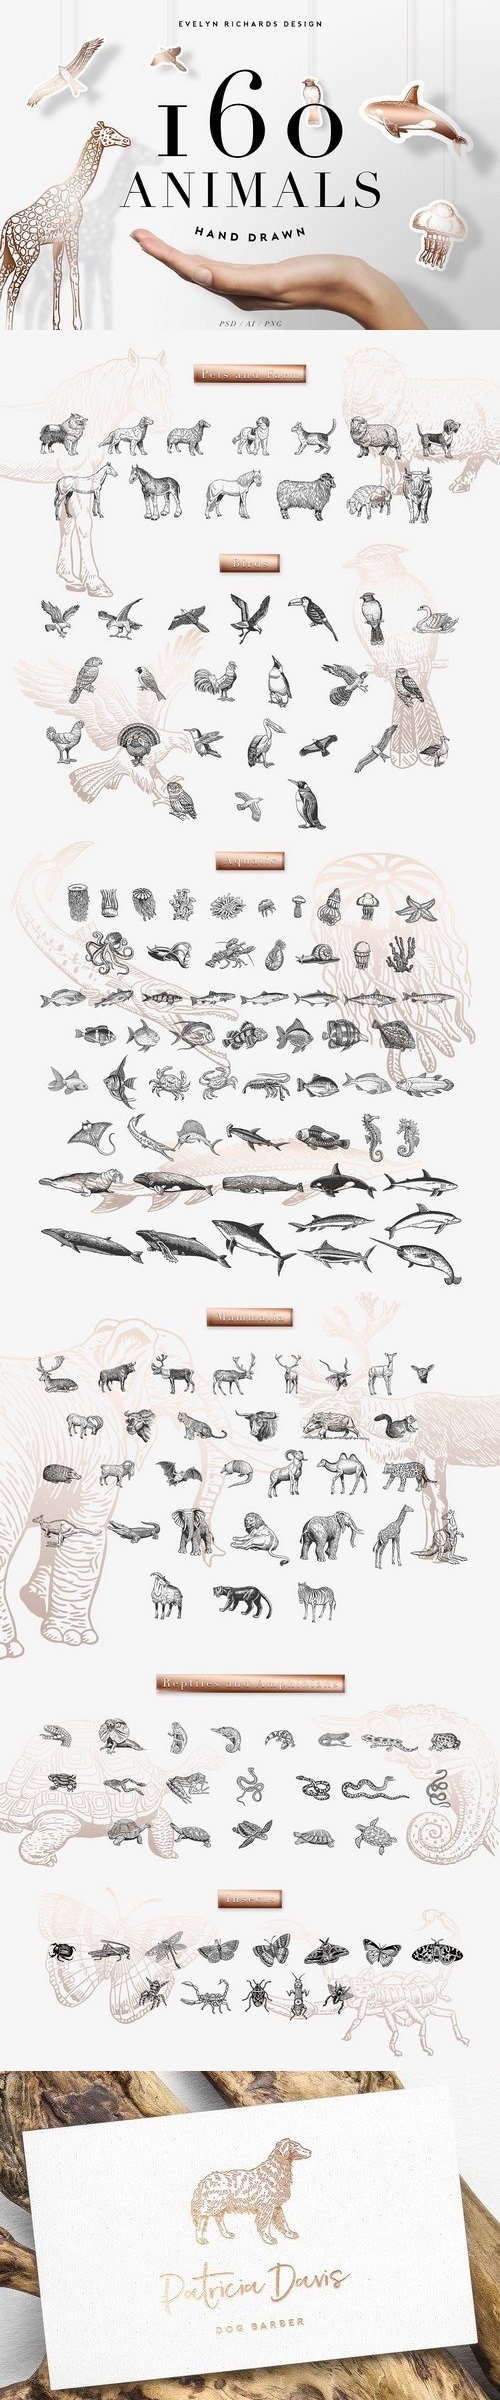 160 Animals - Hand Drawn - 1812147